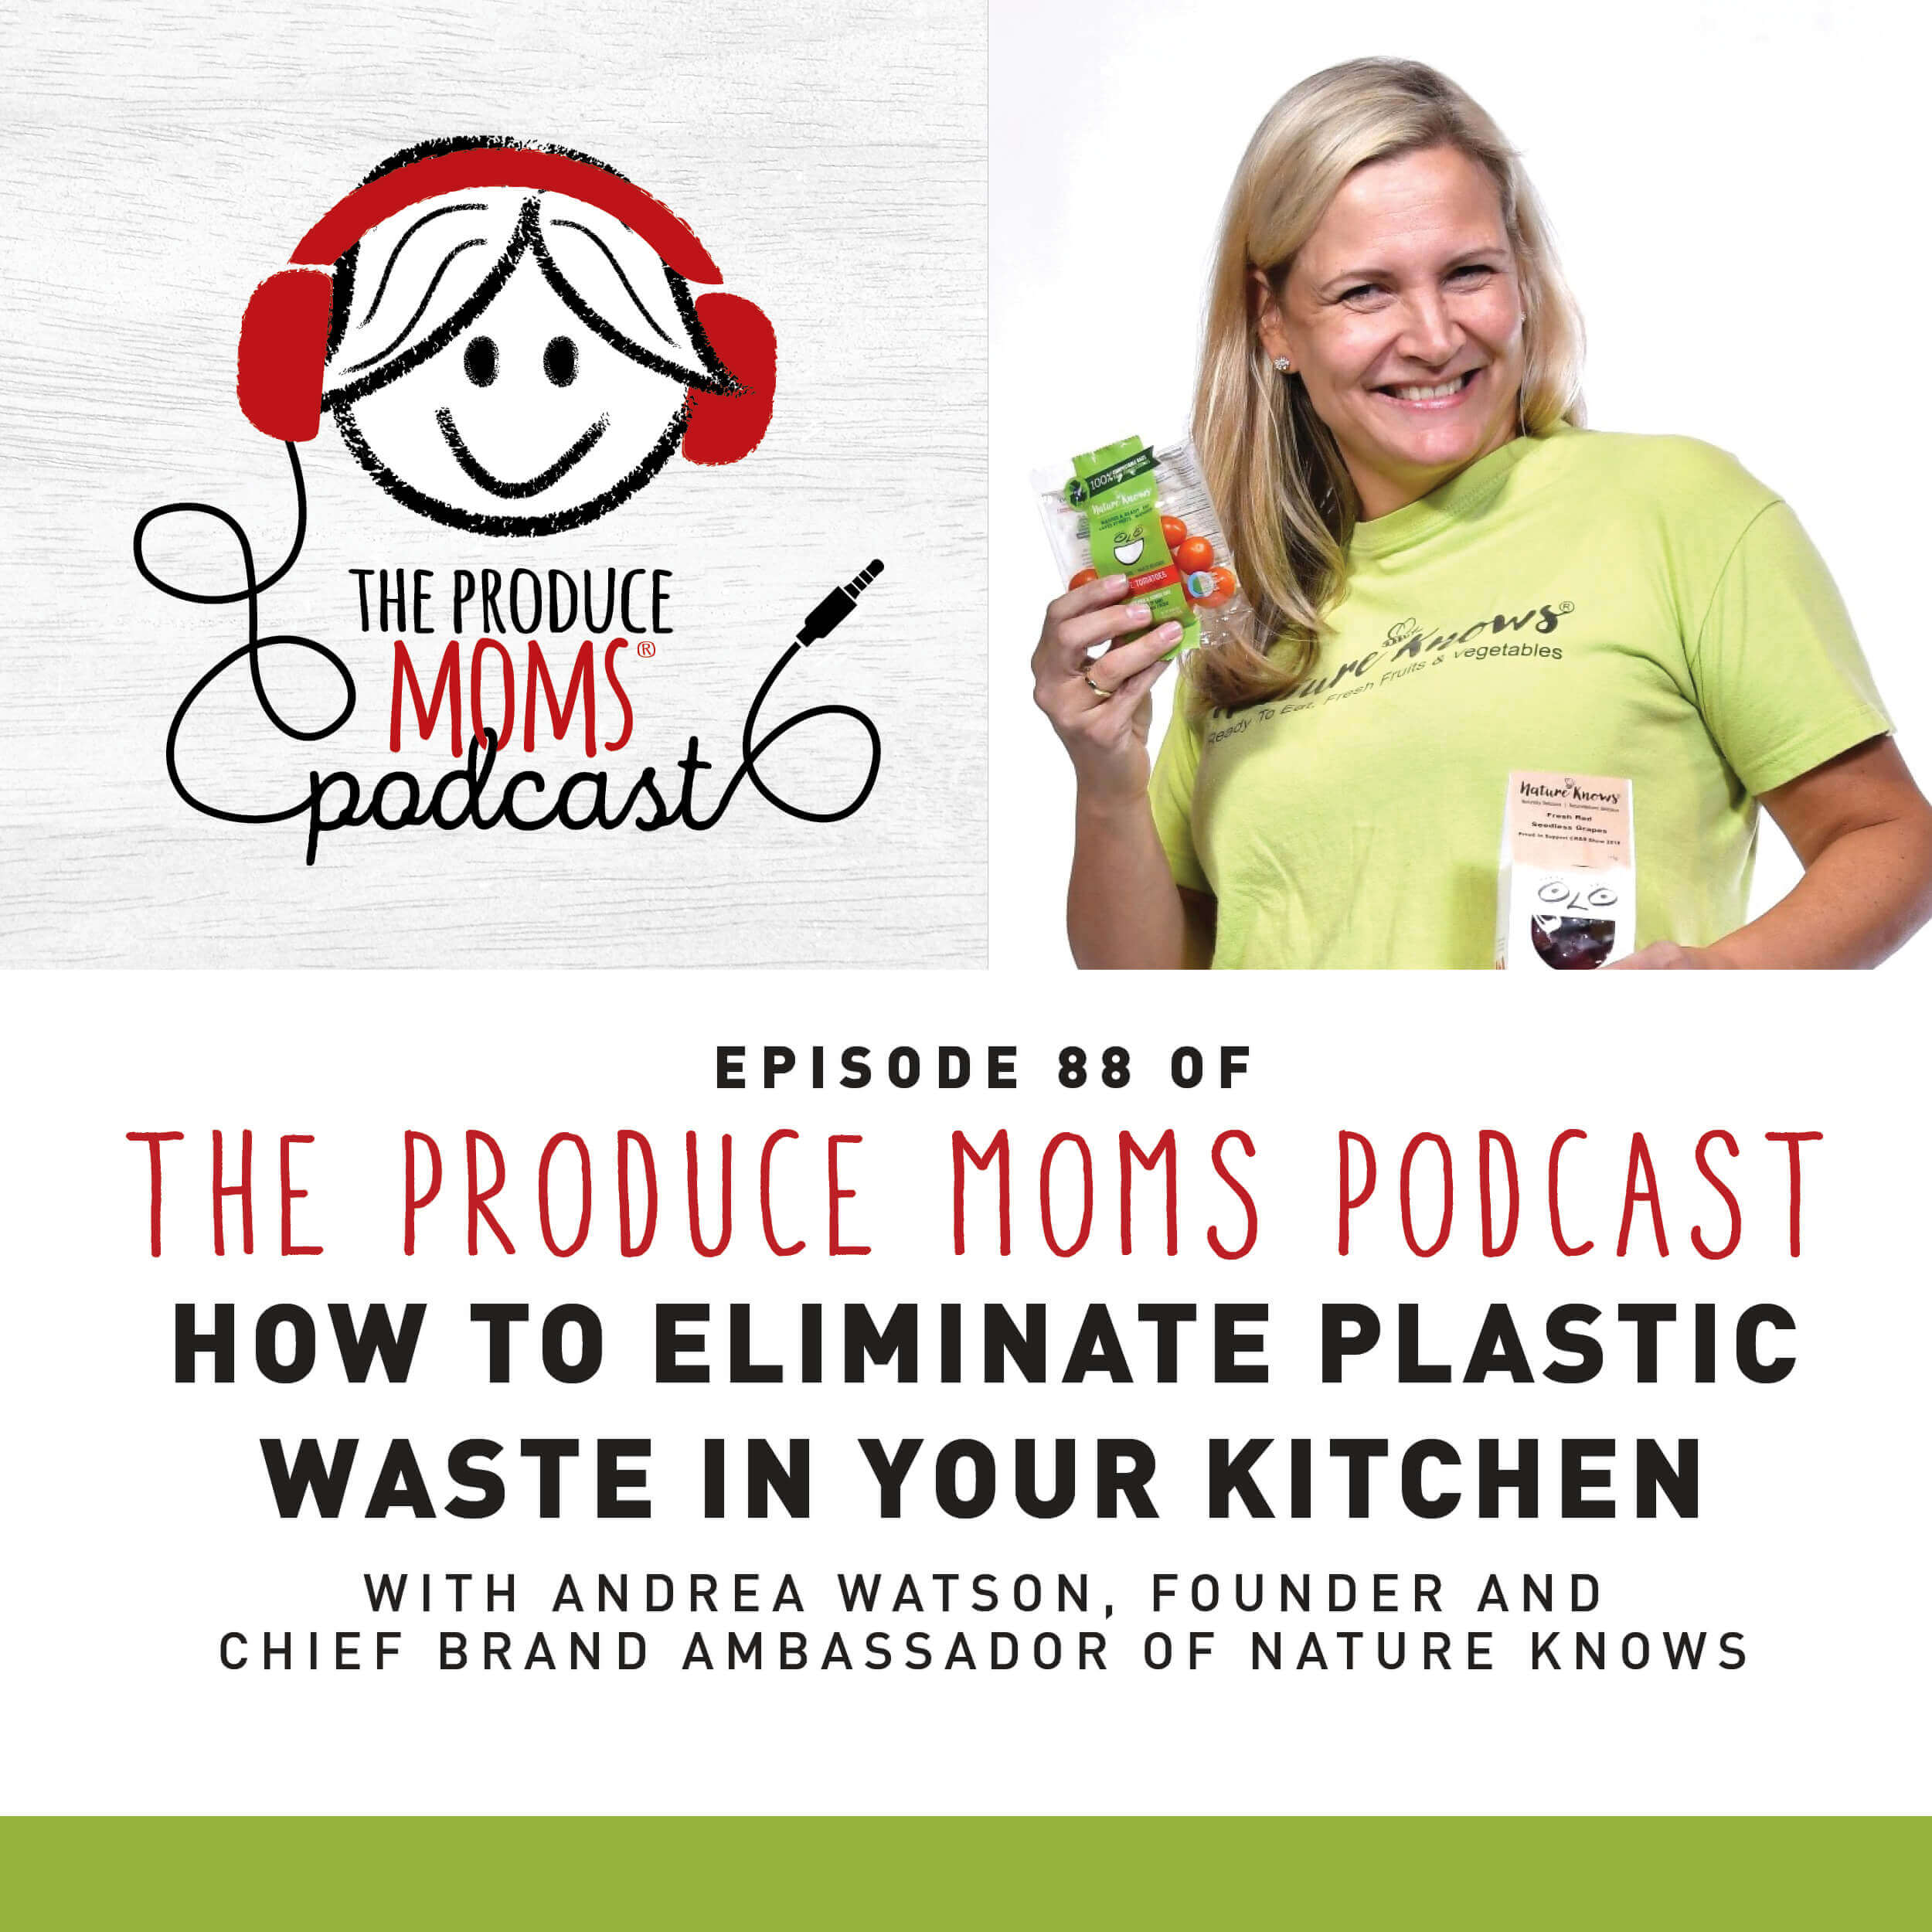 TPM Podcast Eliminate Plastic Waste